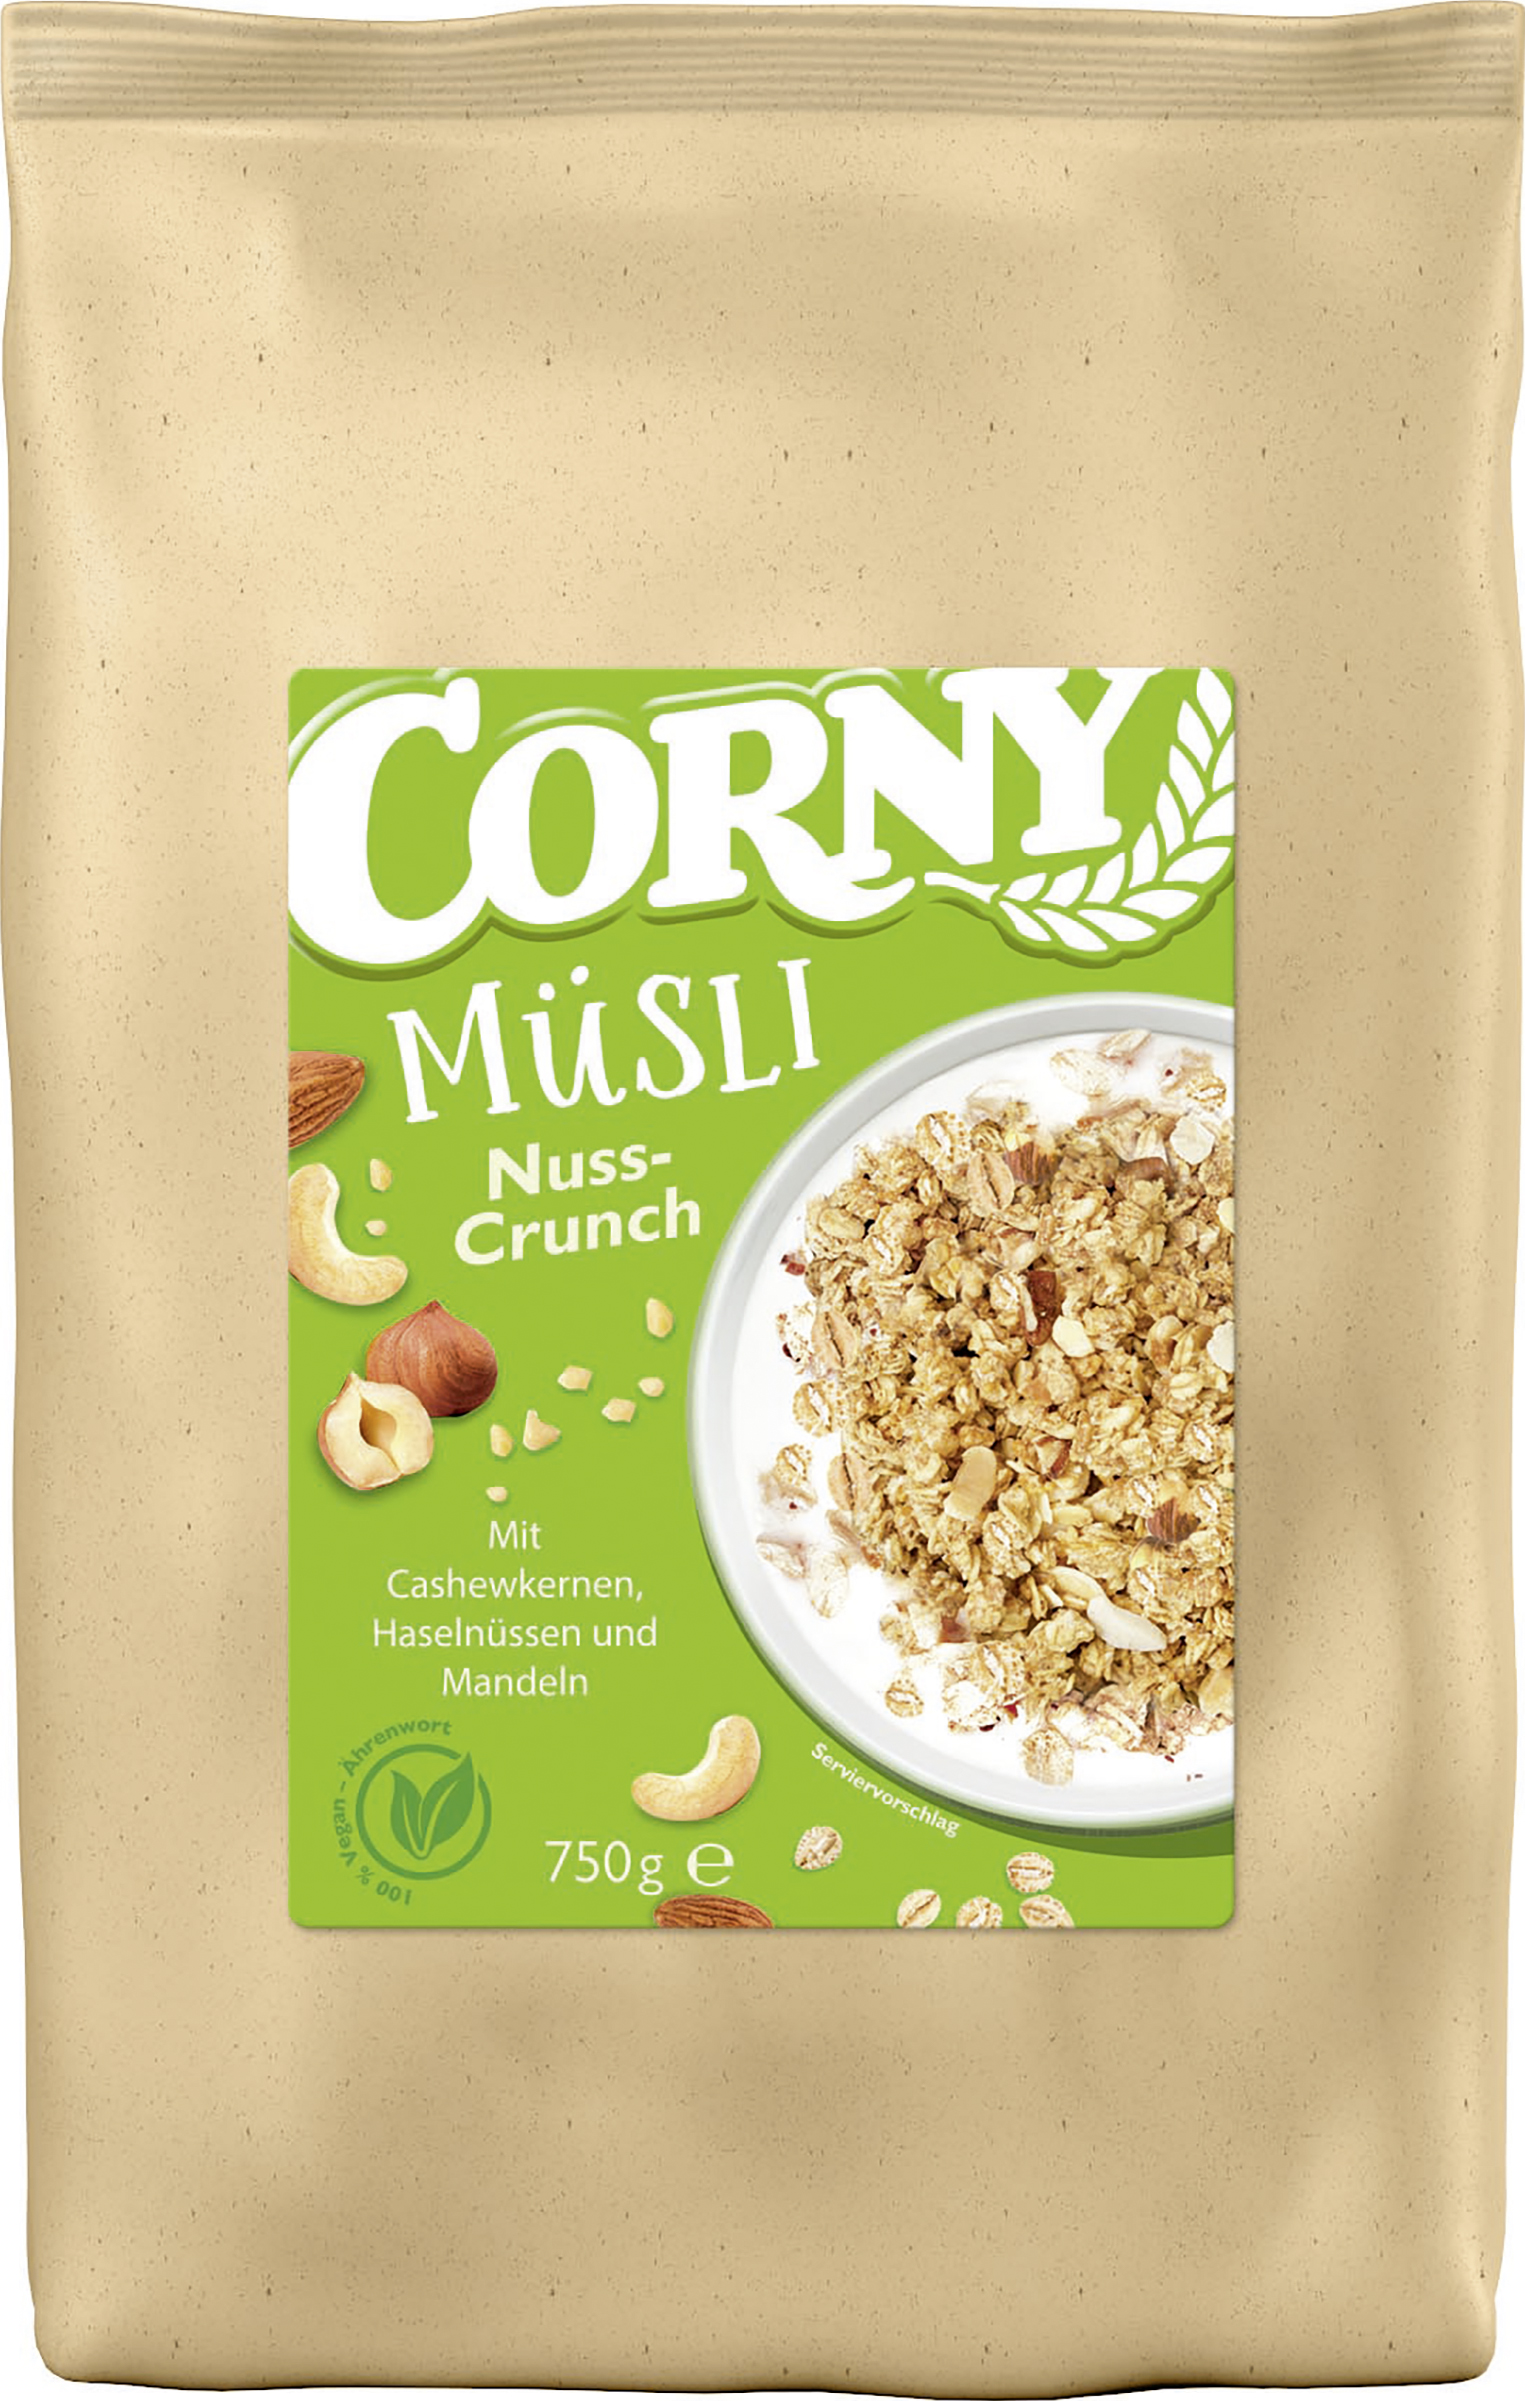 Corny Müsli Nuss Crunch 750g Beutel